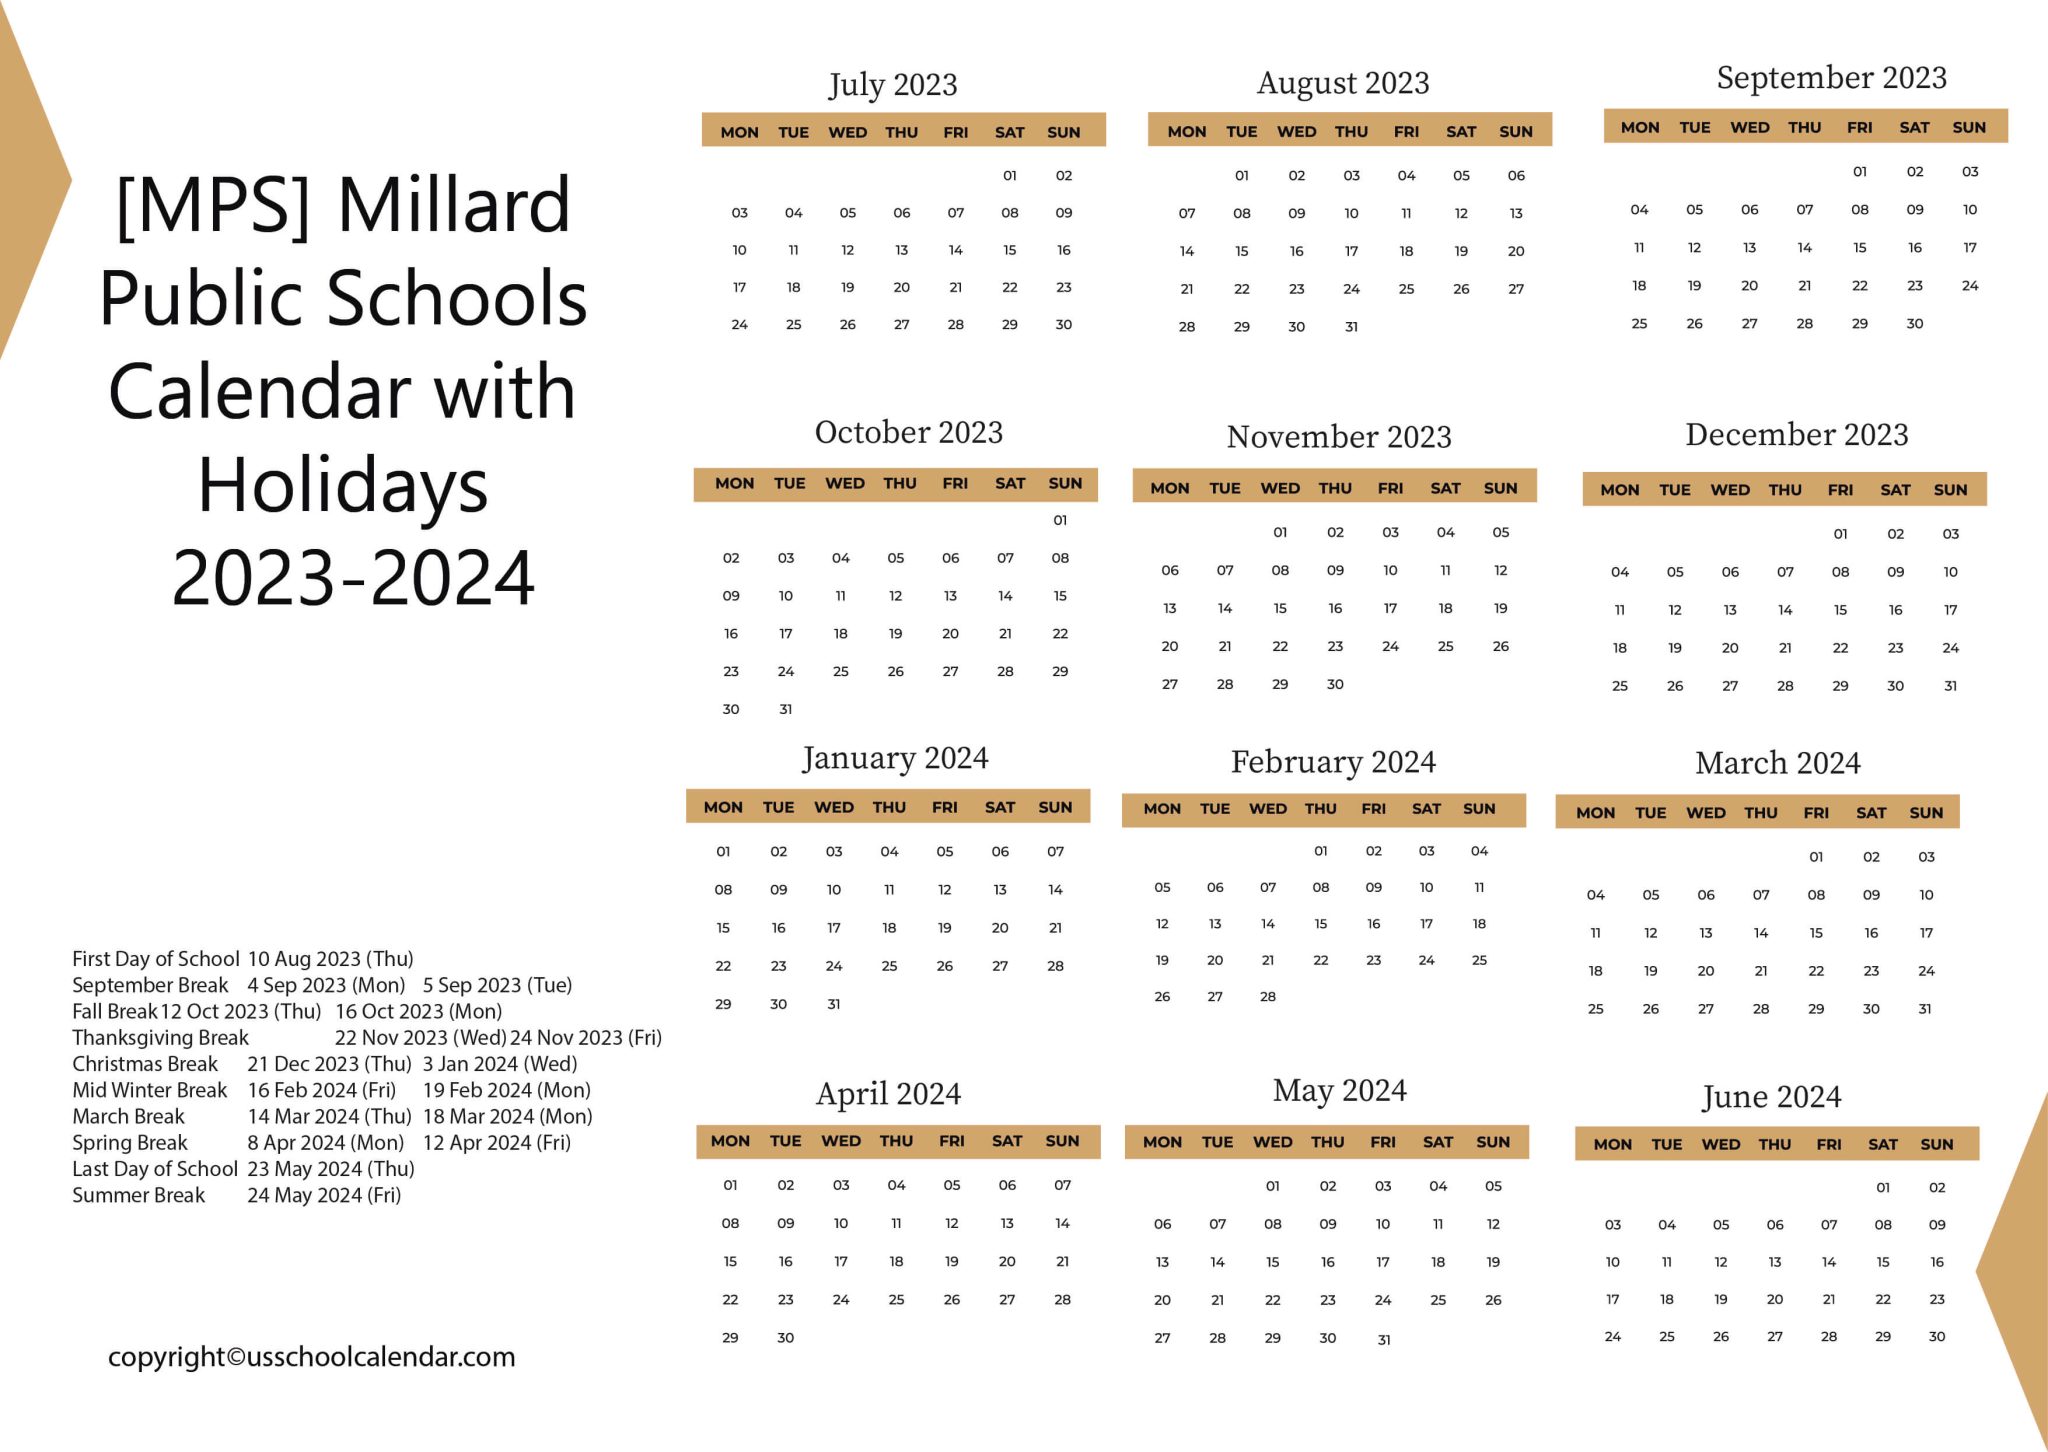 [MPS] Millard Public Schools Calendar with Holidays 20232024